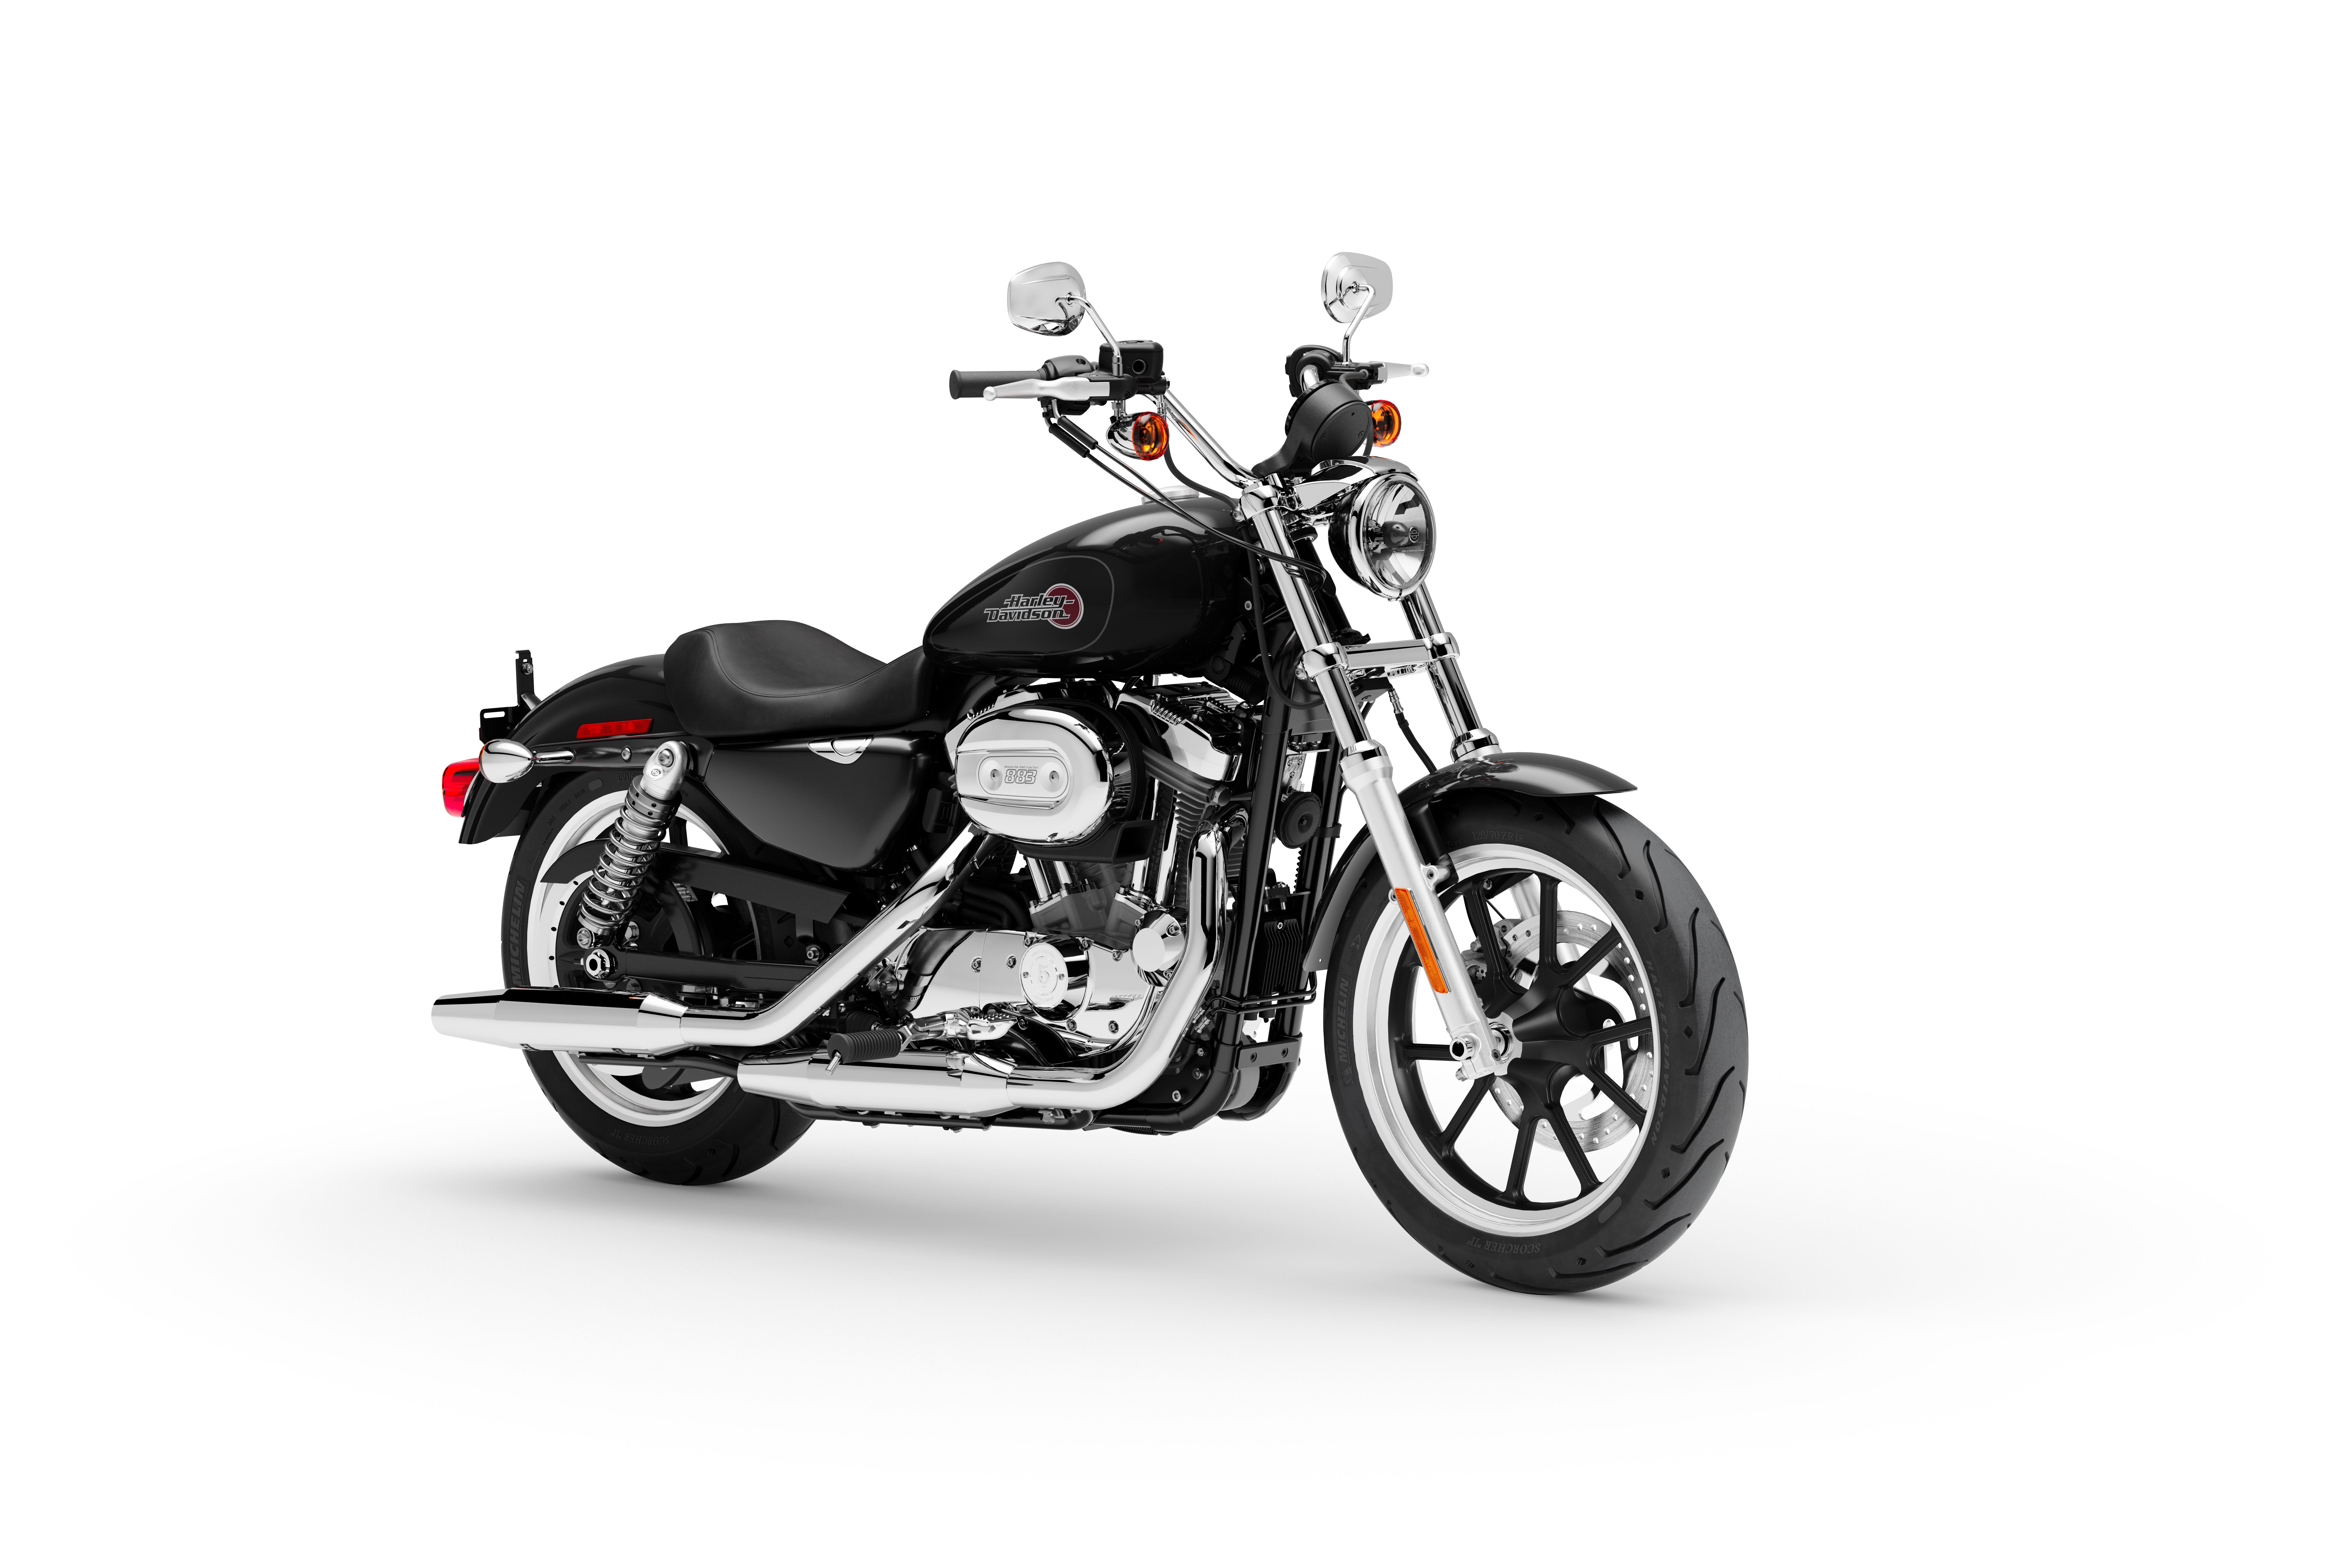 Harley Davidson Sportster studio shot